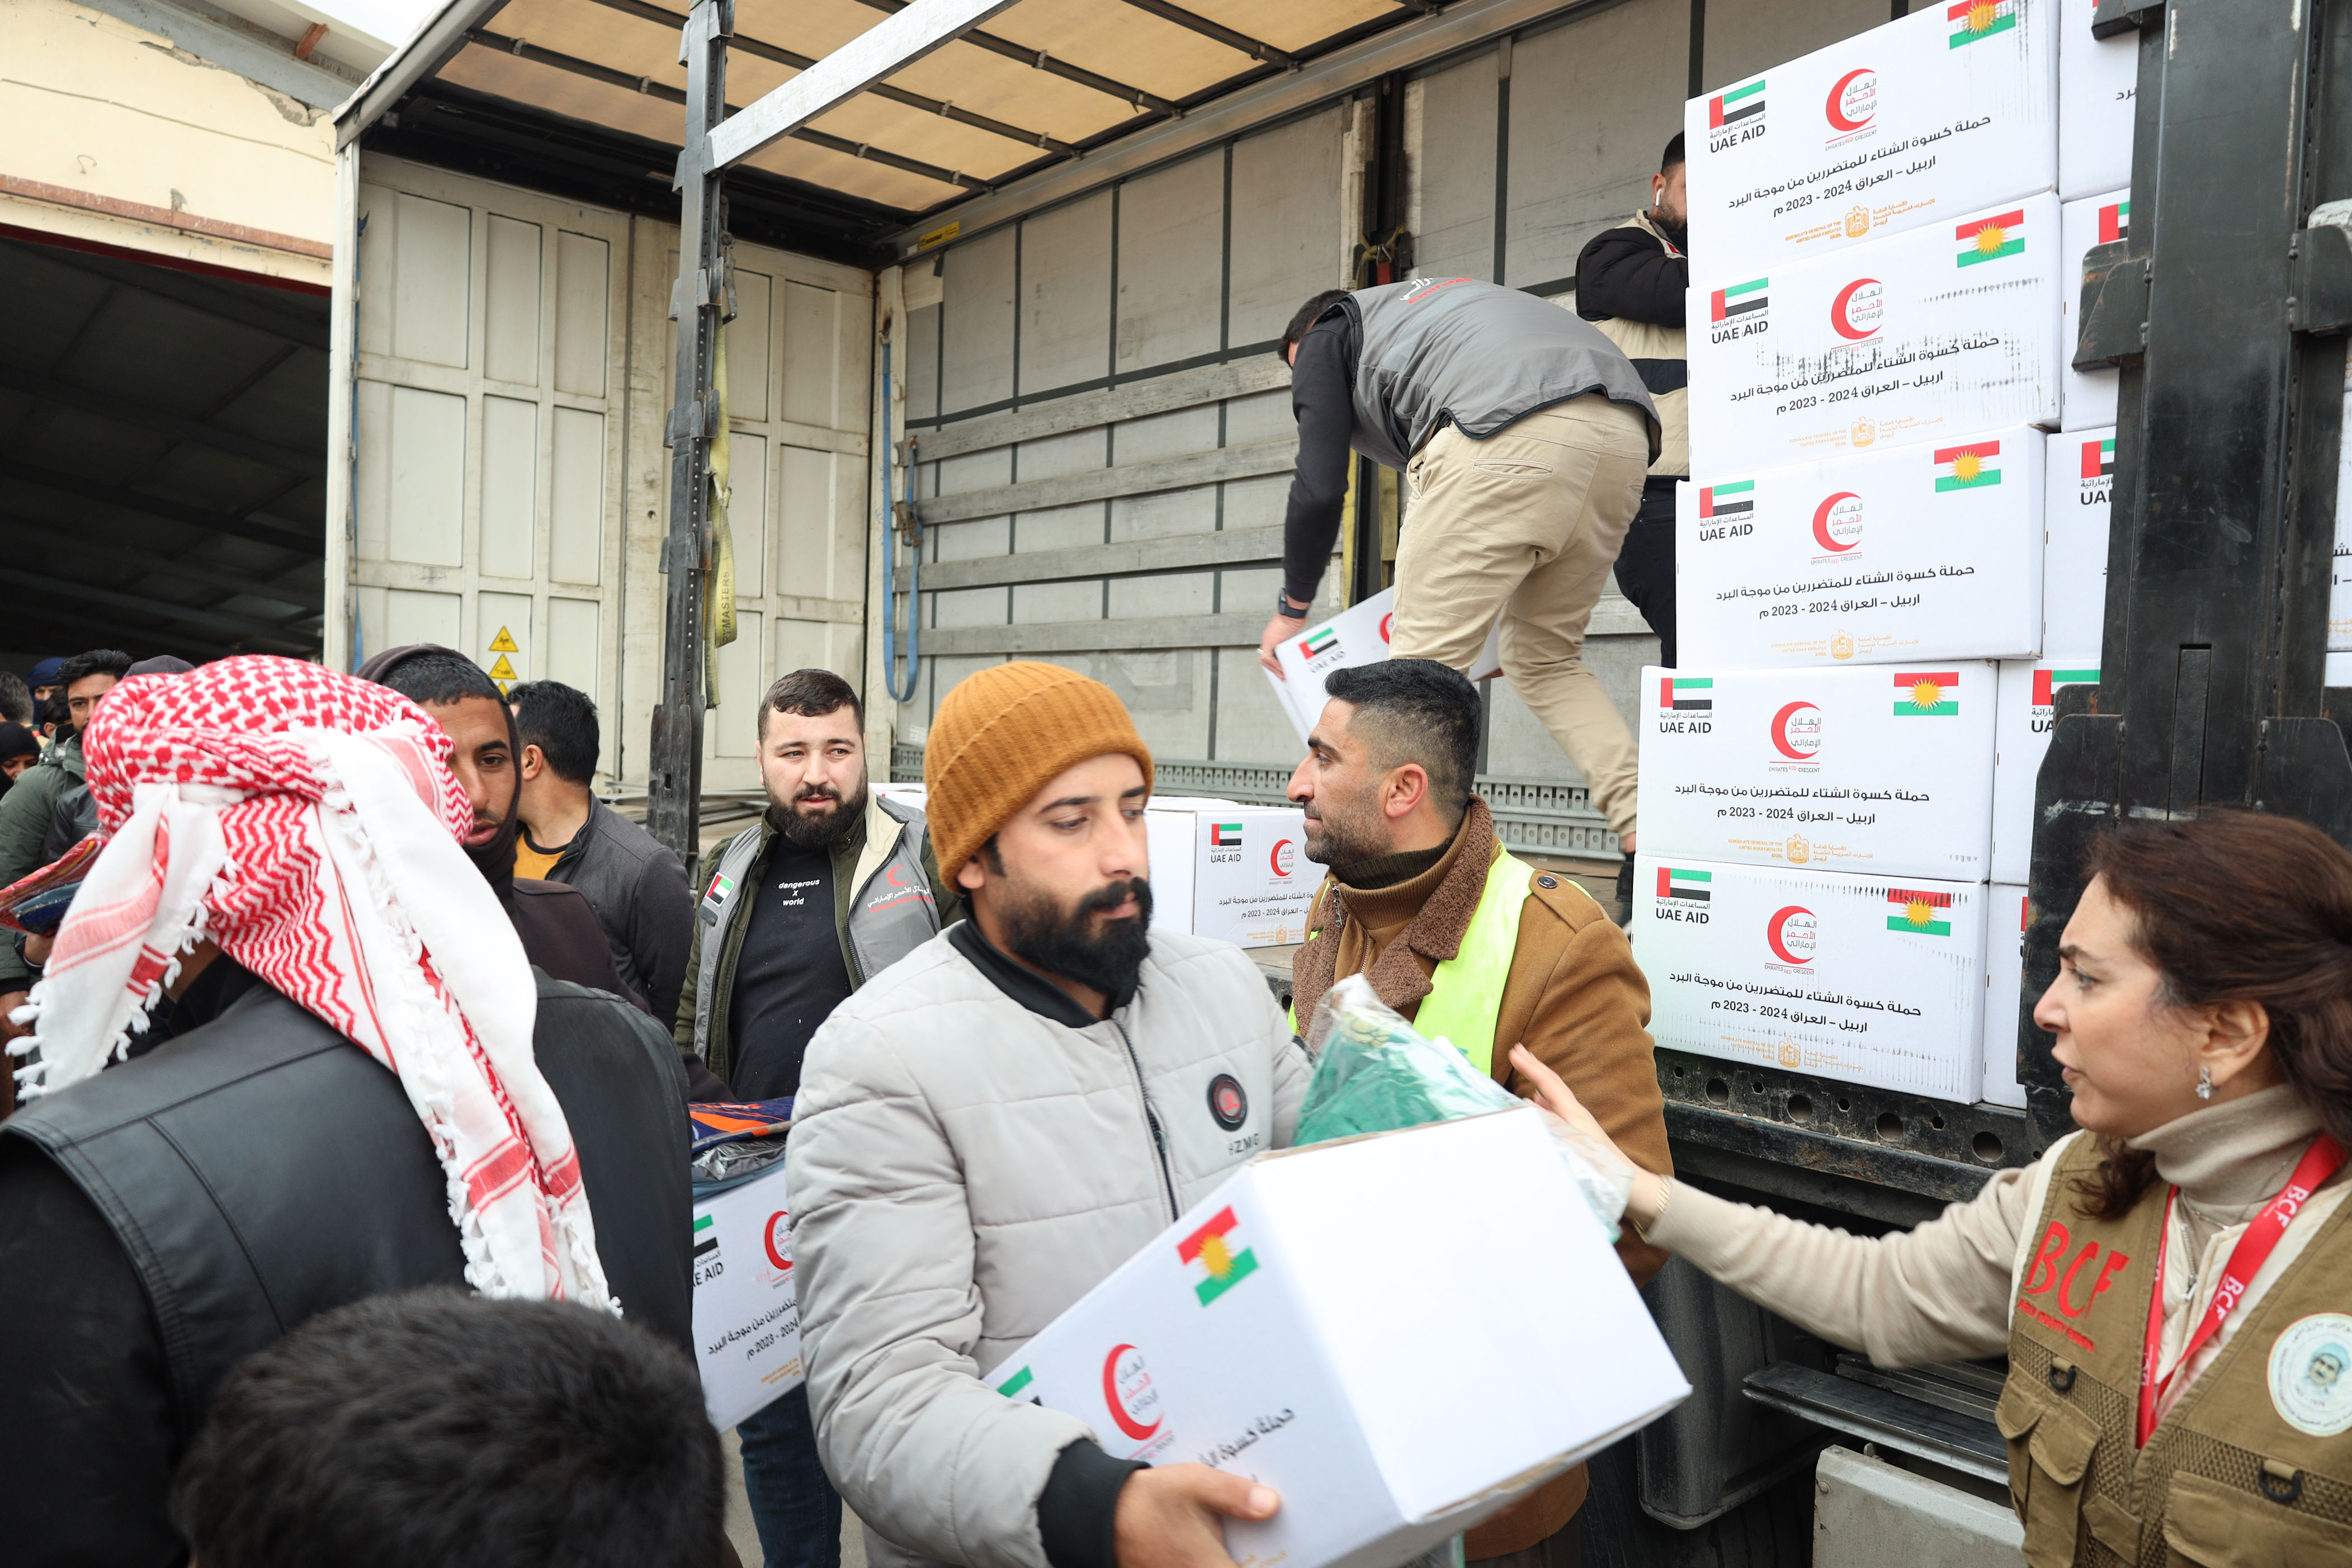 10,000 people benefit from erc winter aid in kurdistan, iraq